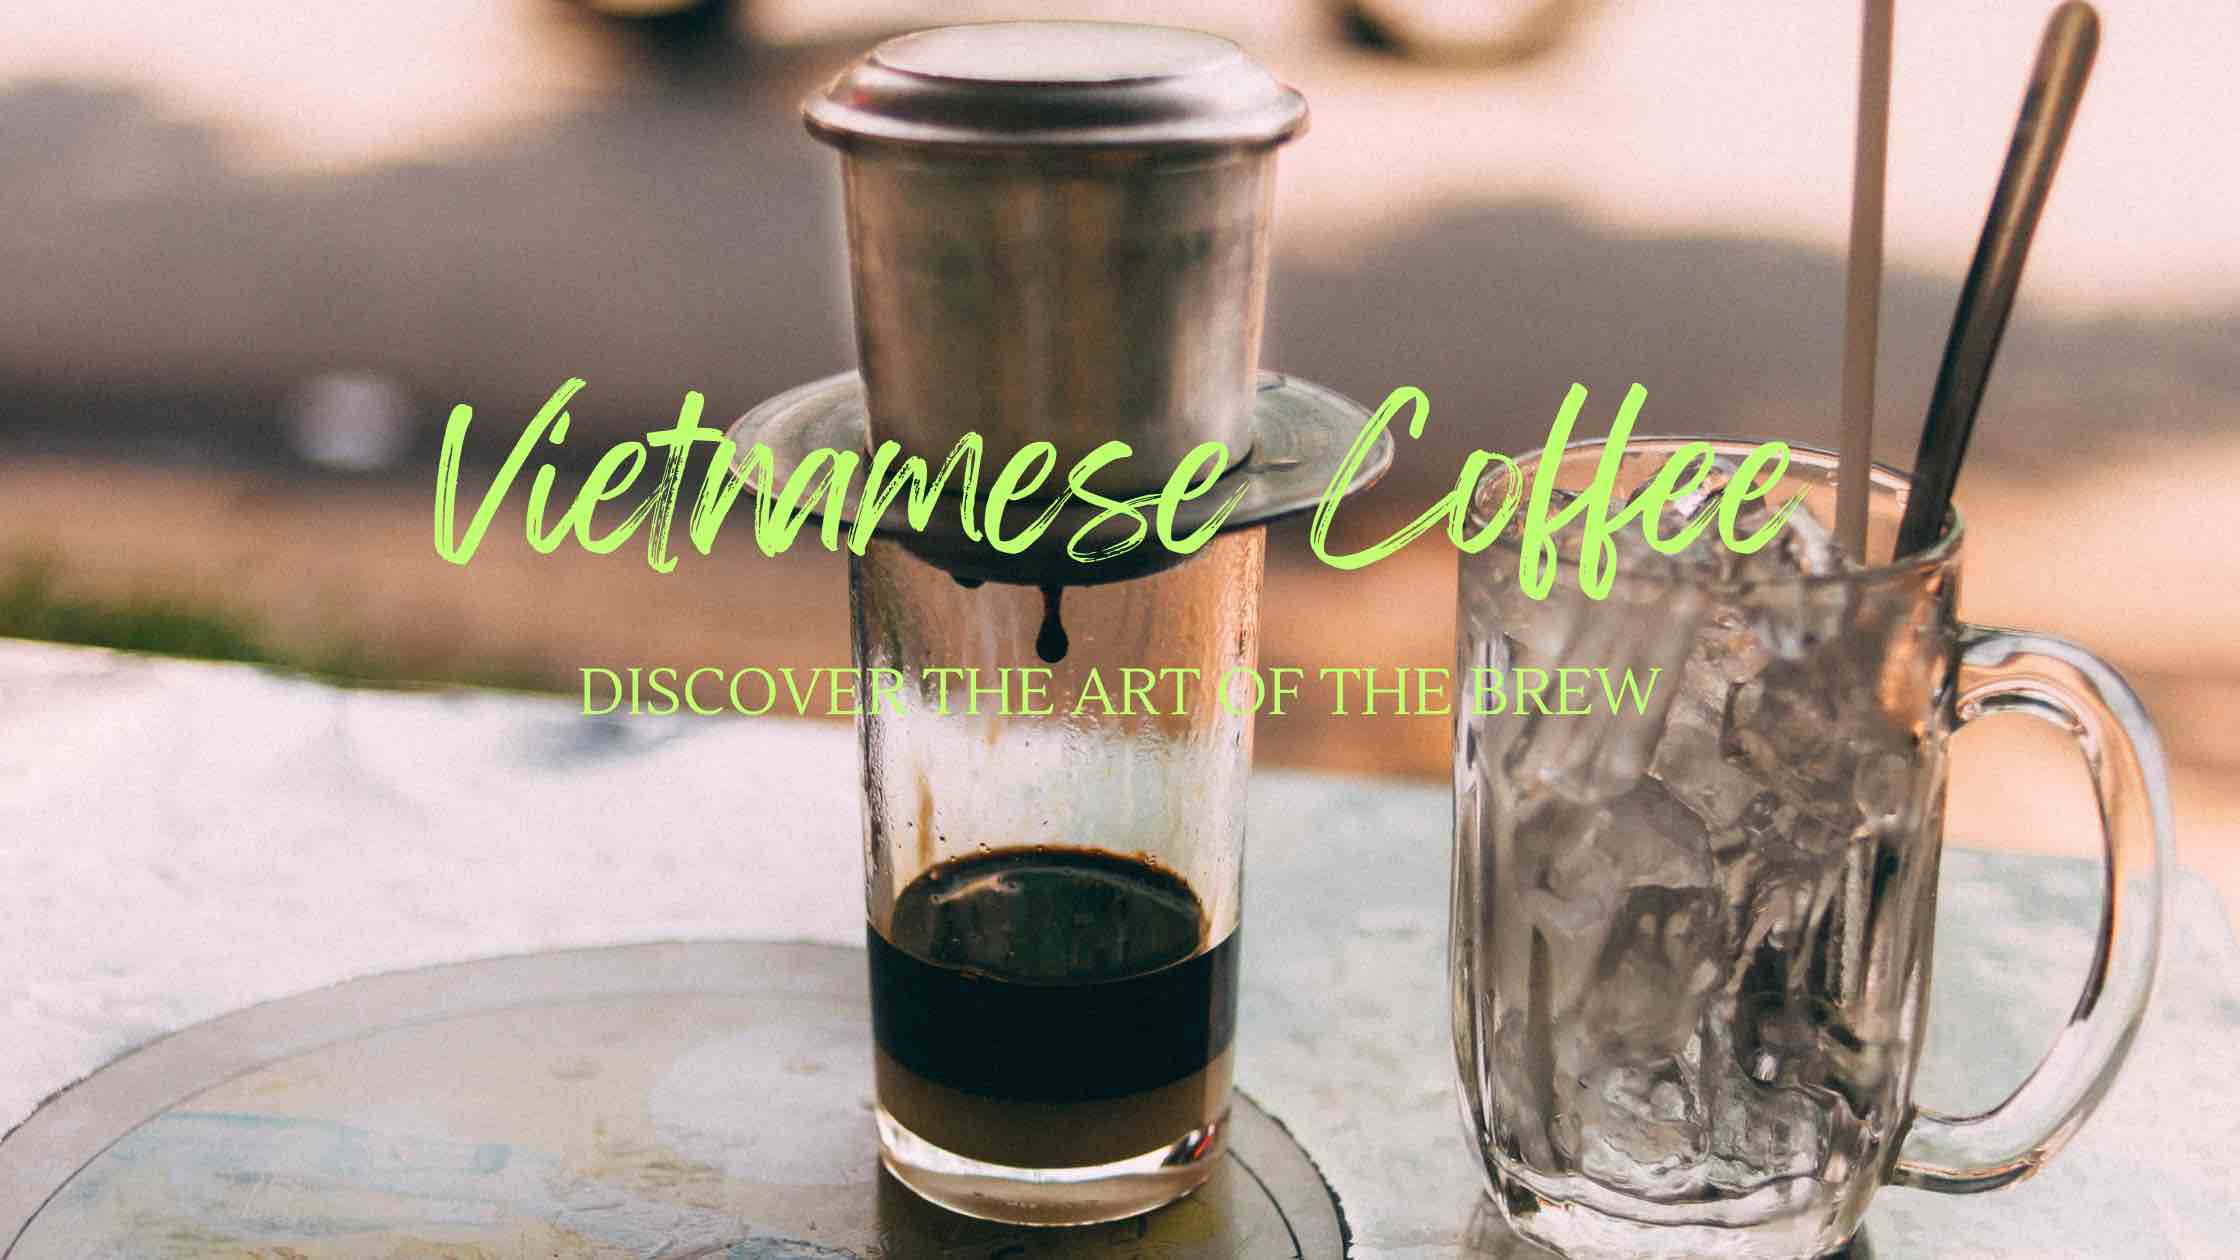 Vietnamese Coffee Blog Post